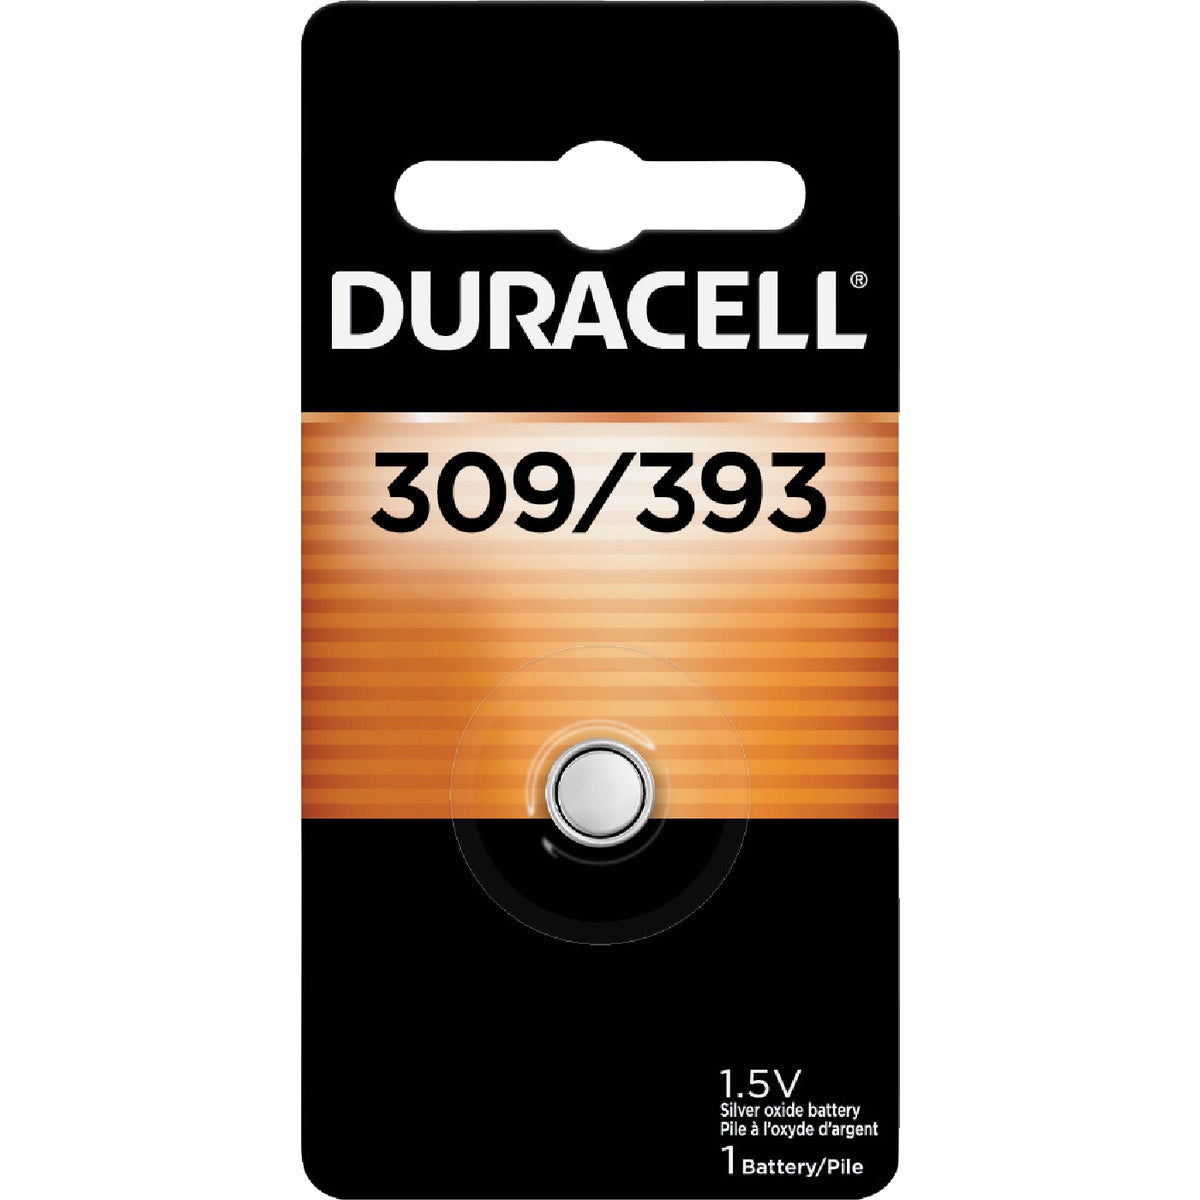 Item 822841, DuraLock Power Preserve Technology.